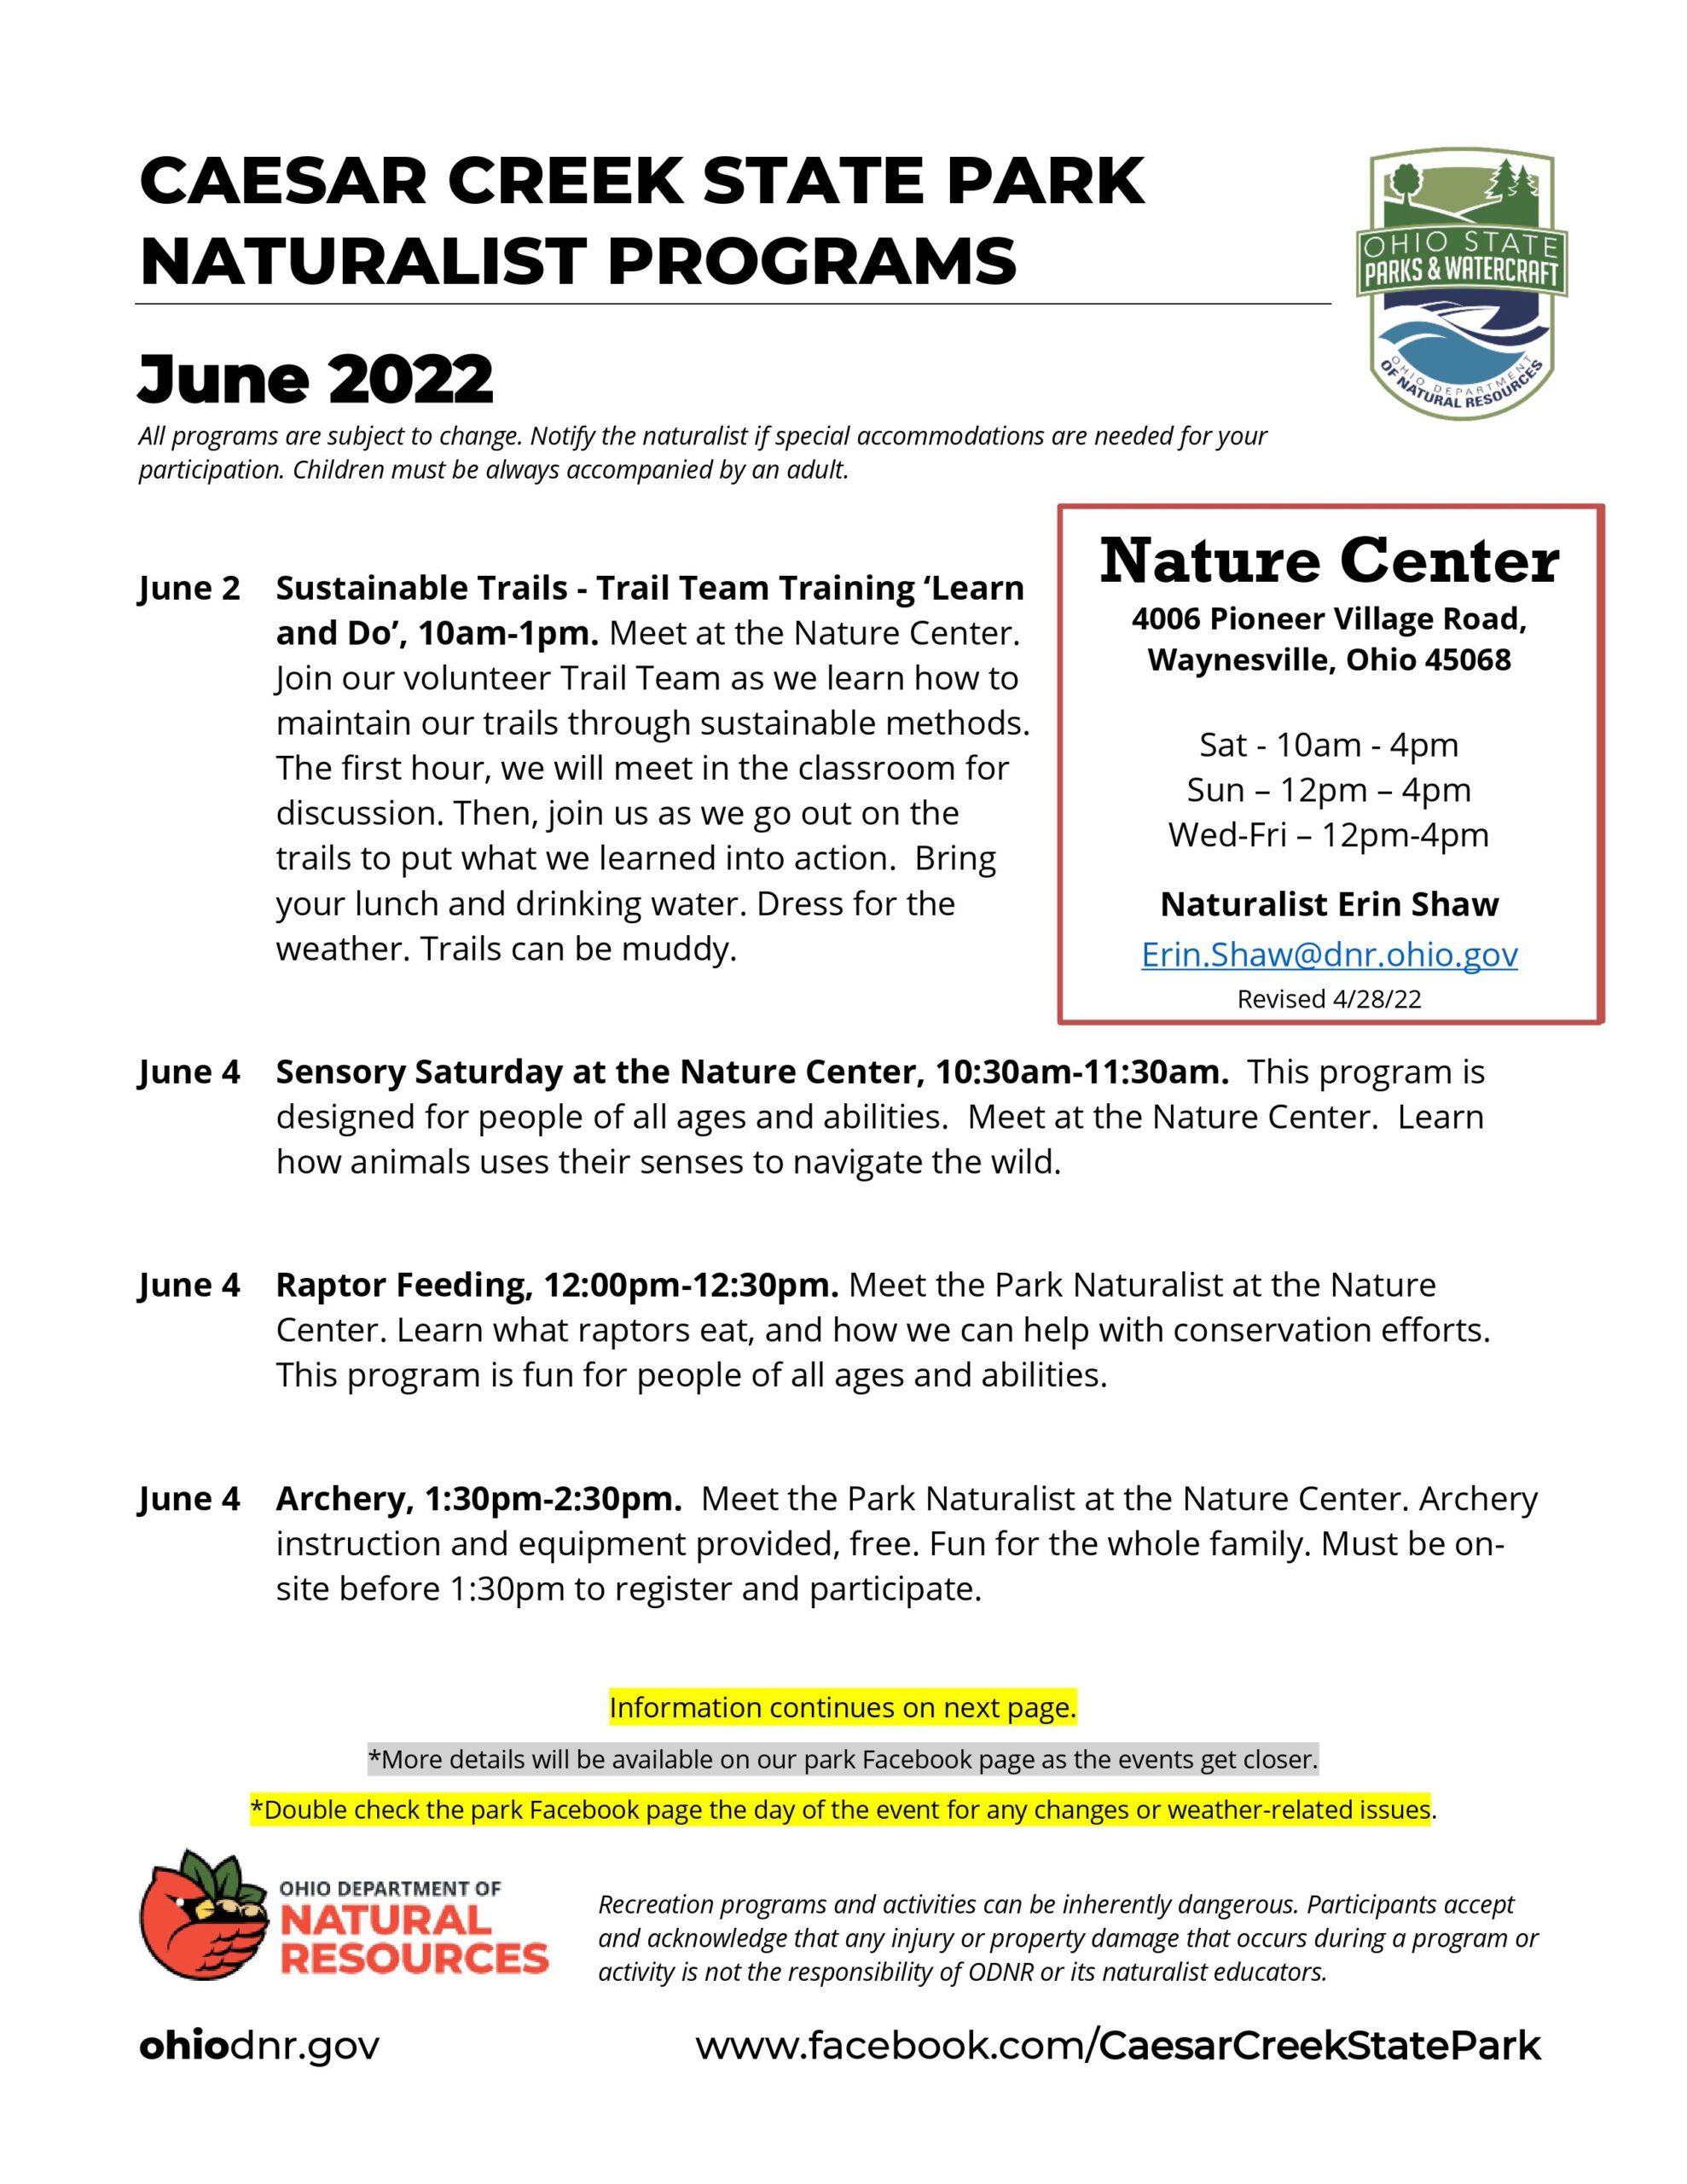 June 2022 Programs1